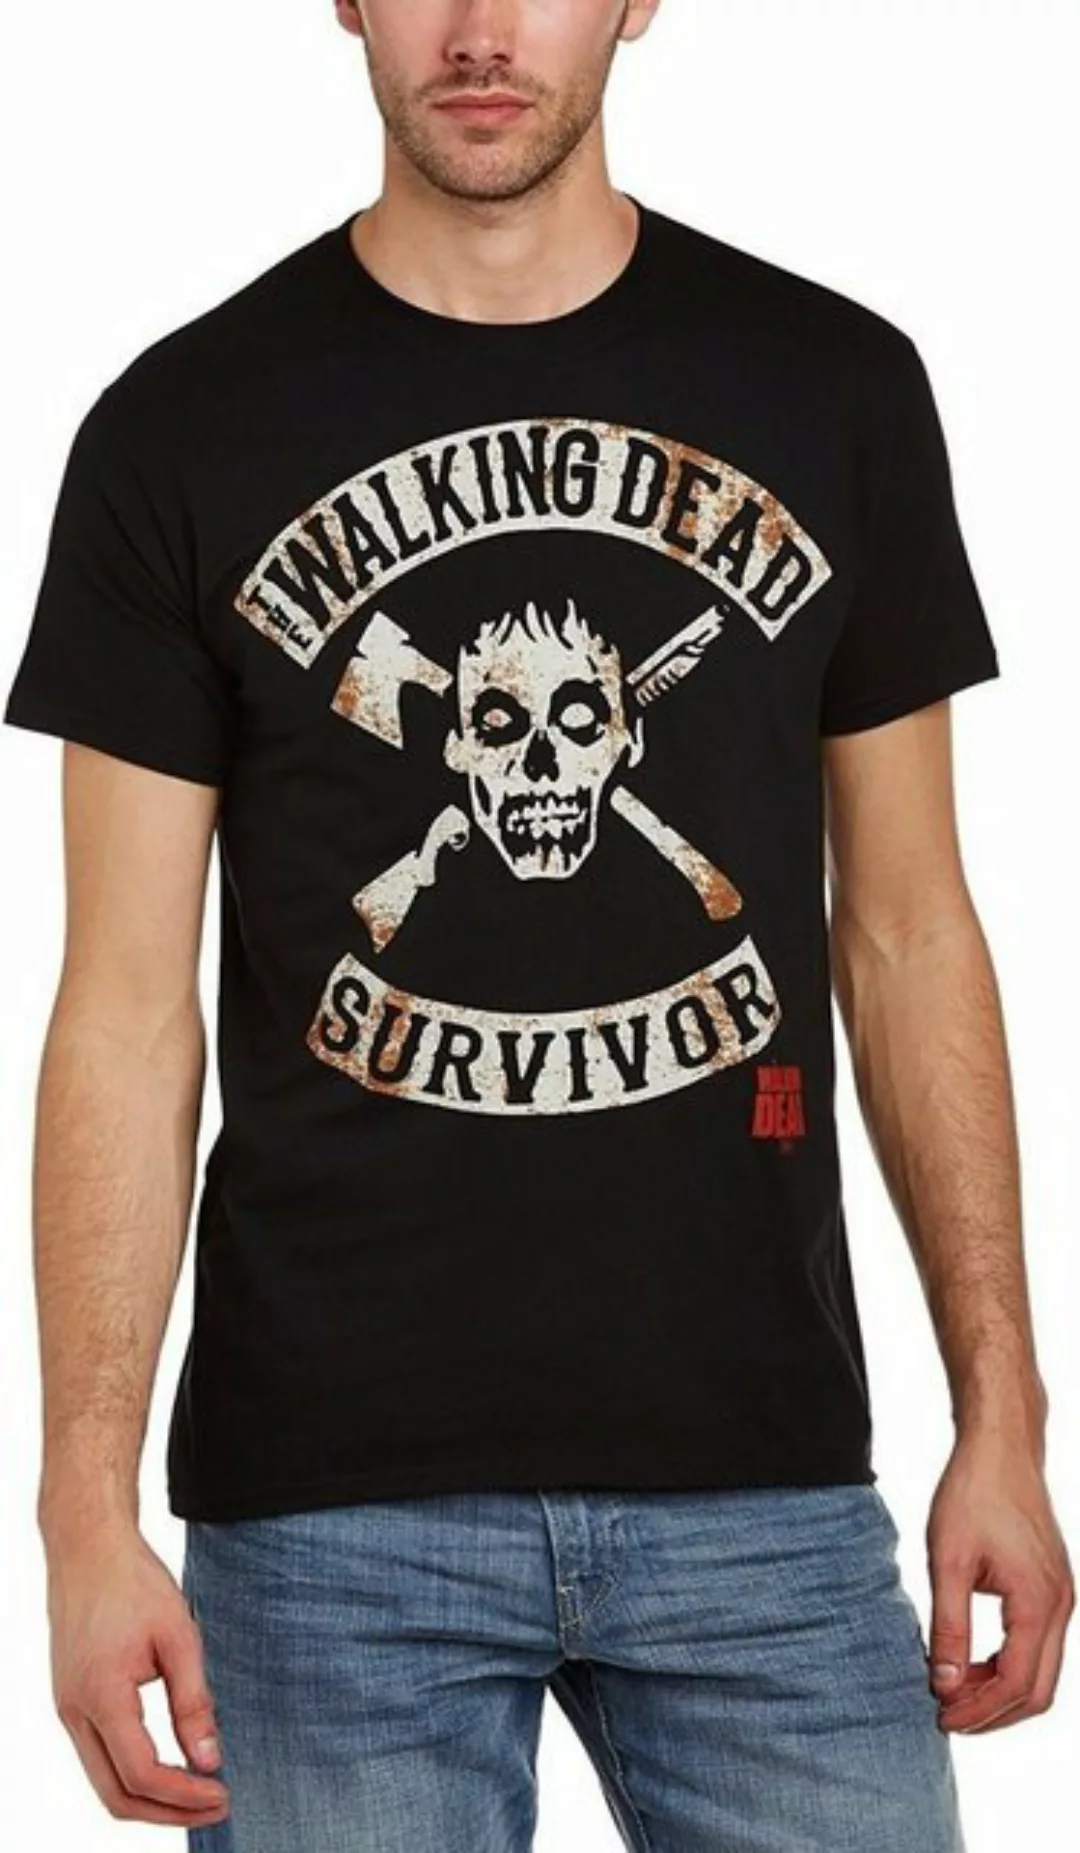 The Walking Dead Print-Shirt The Walking Dead T-Shirt Survivoir Black S XL günstig online kaufen